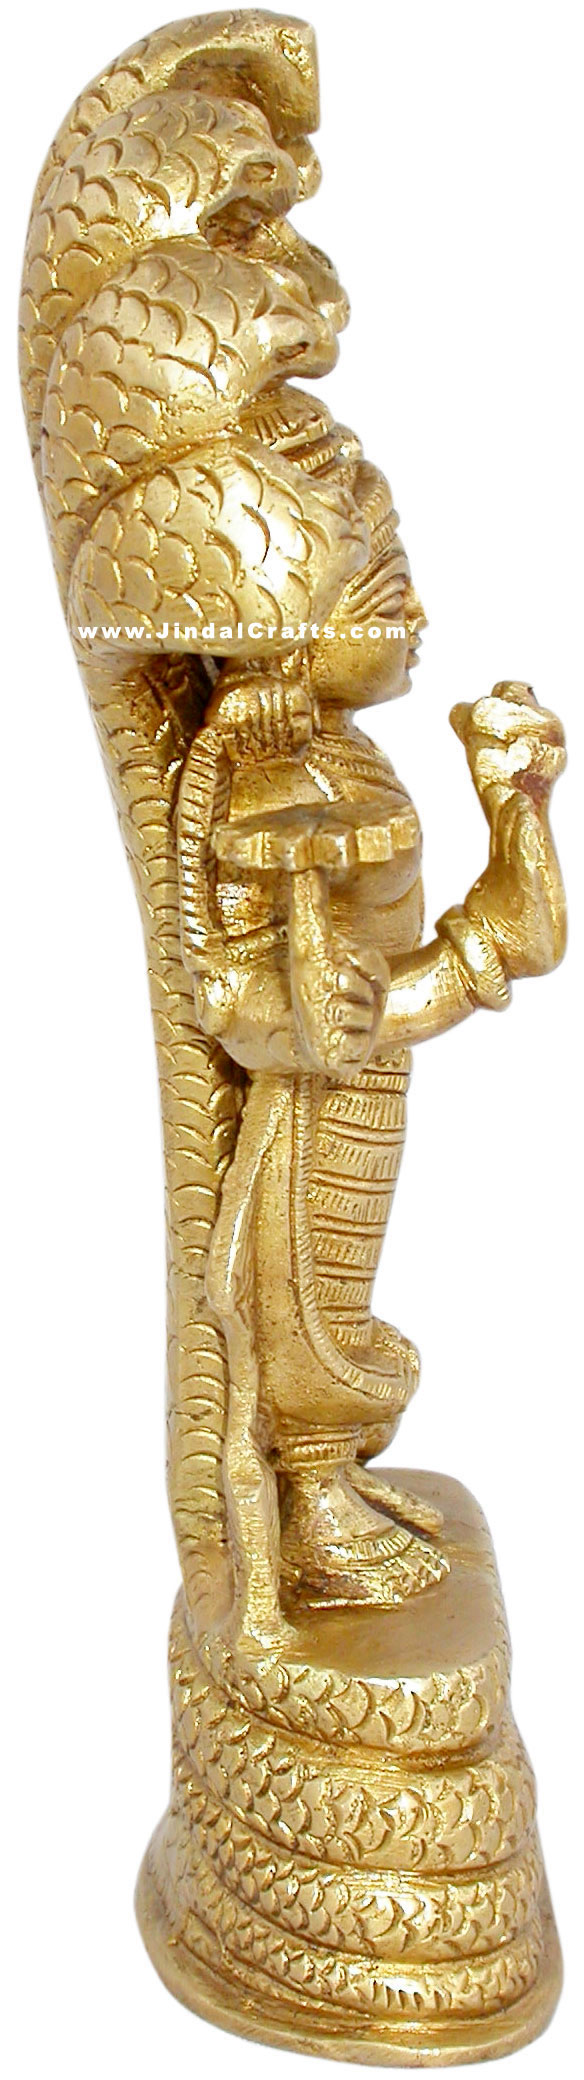 Vishnu Indian God Brass Sculpture Handmade Arifact Arts